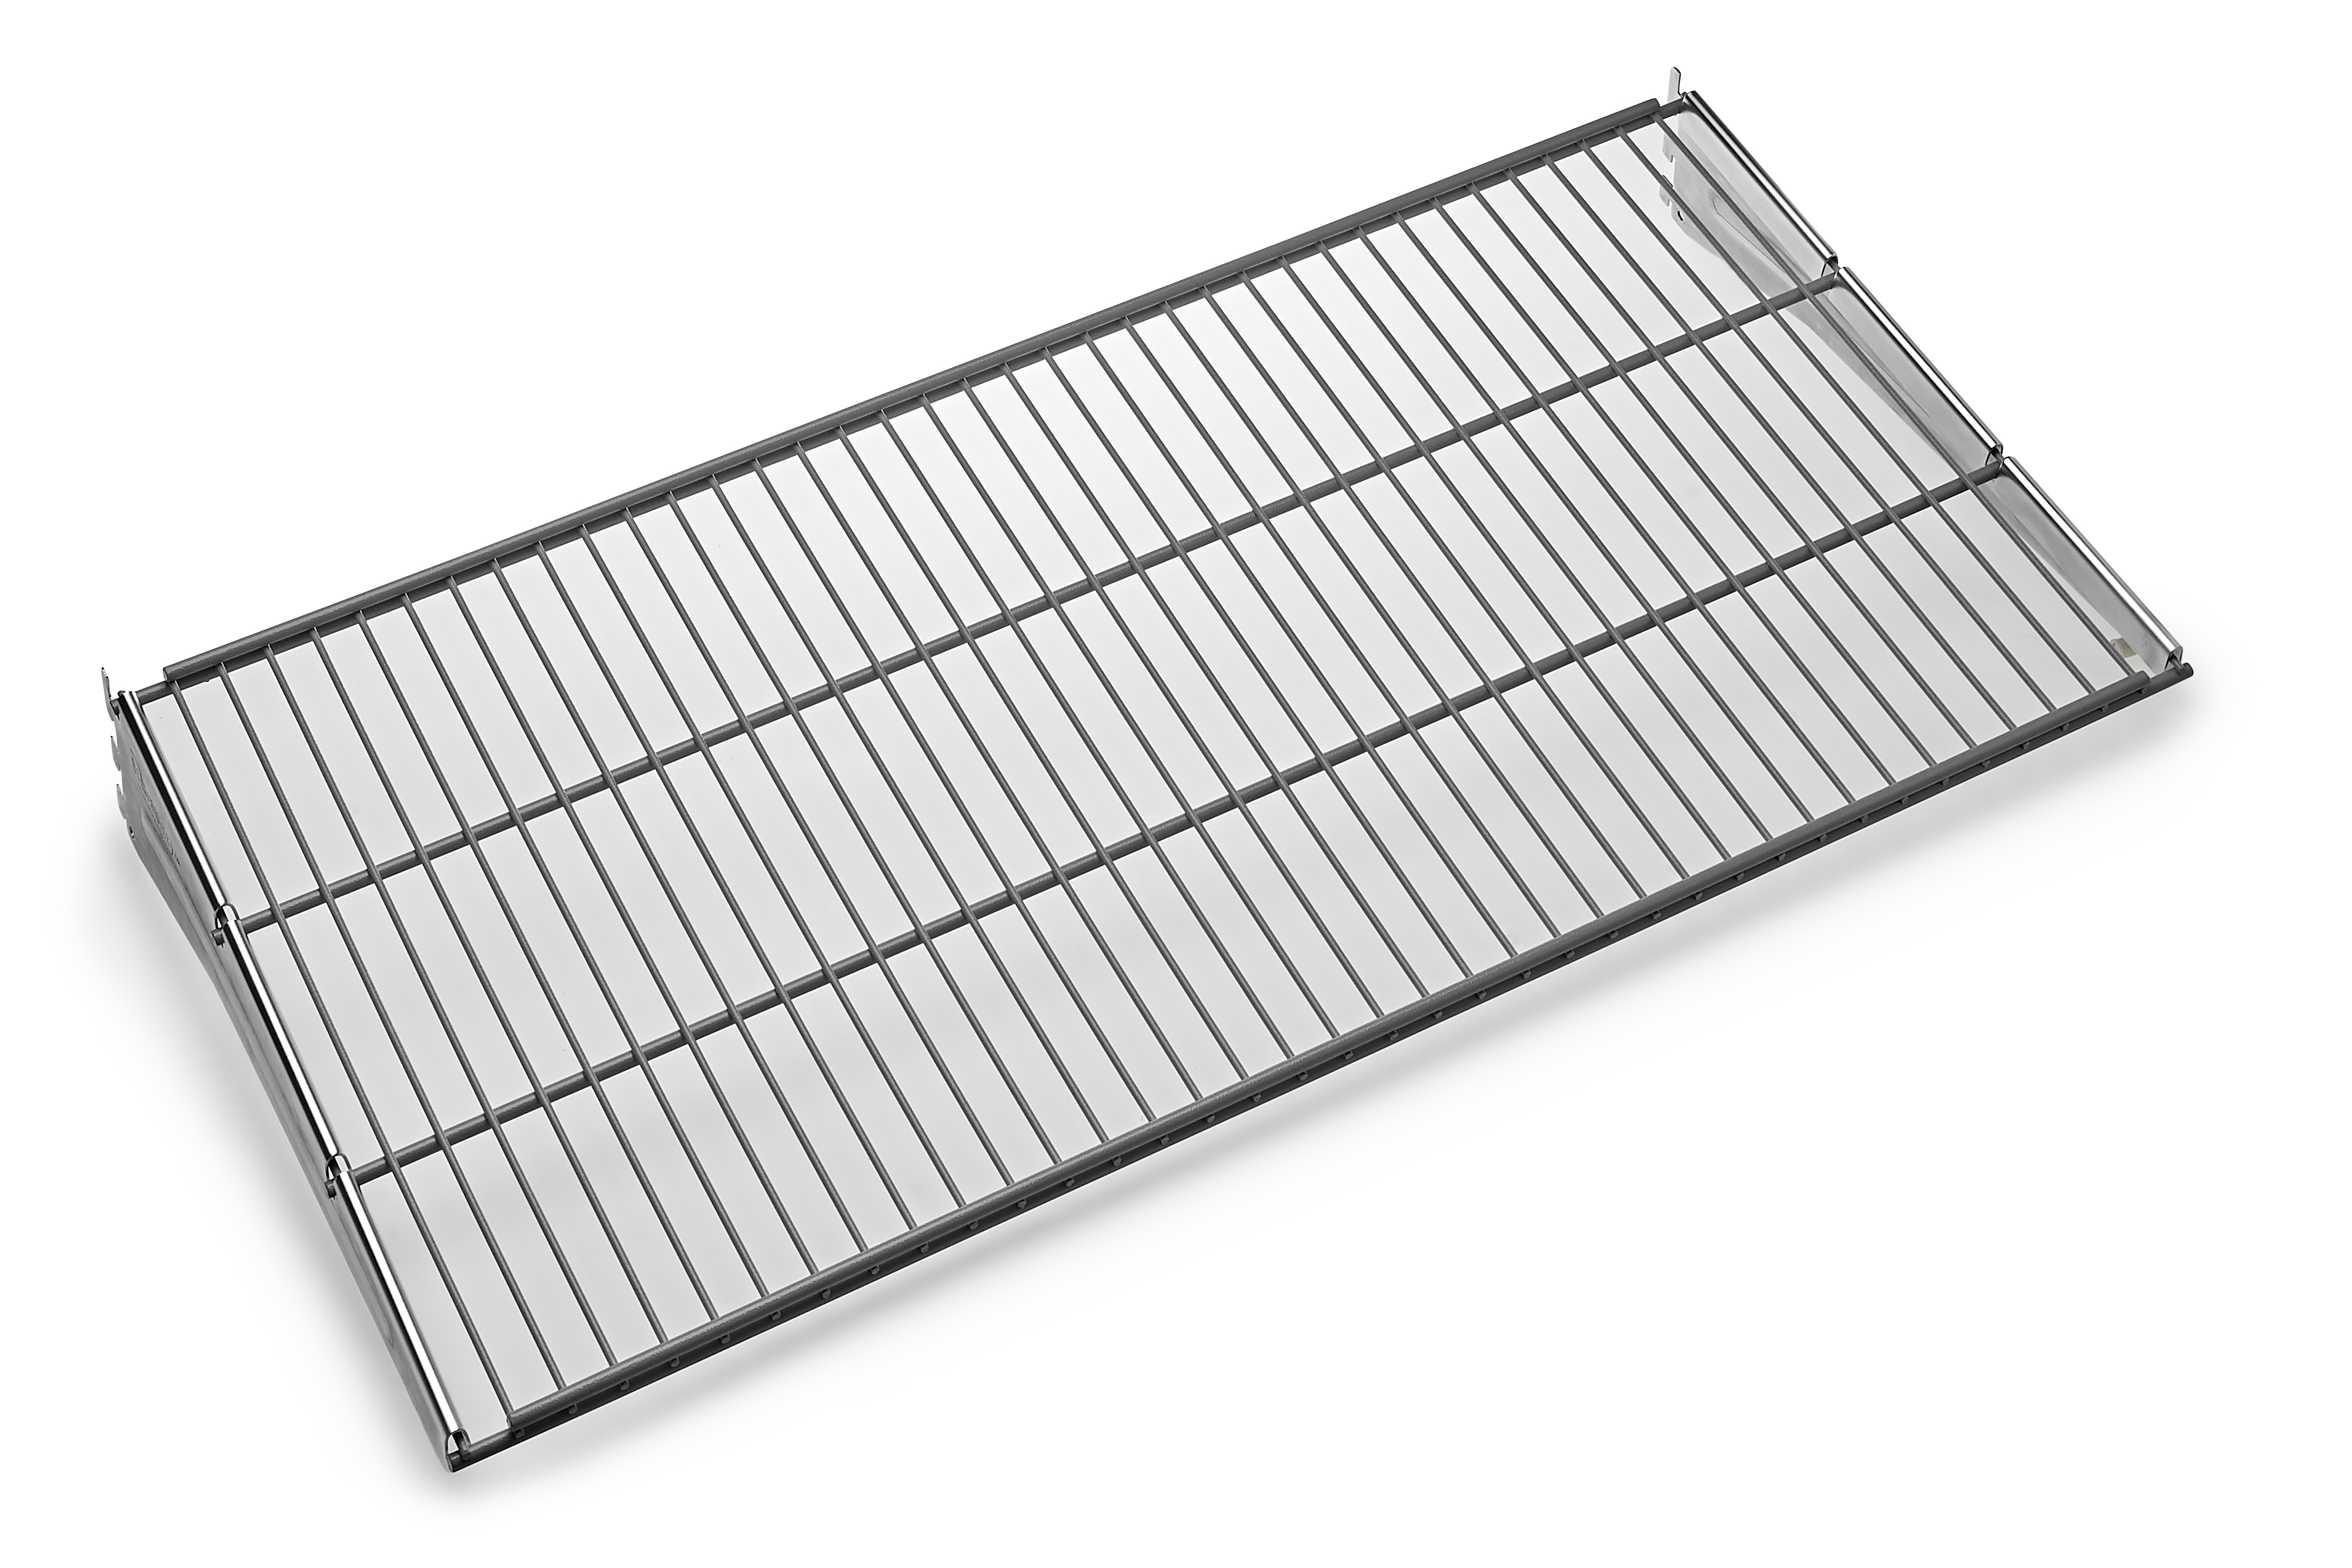 Triton Products® Heavy Duty Wire Shelf, 16 Gauge Epoxy Coated Steel, Gray - image 1 of 2